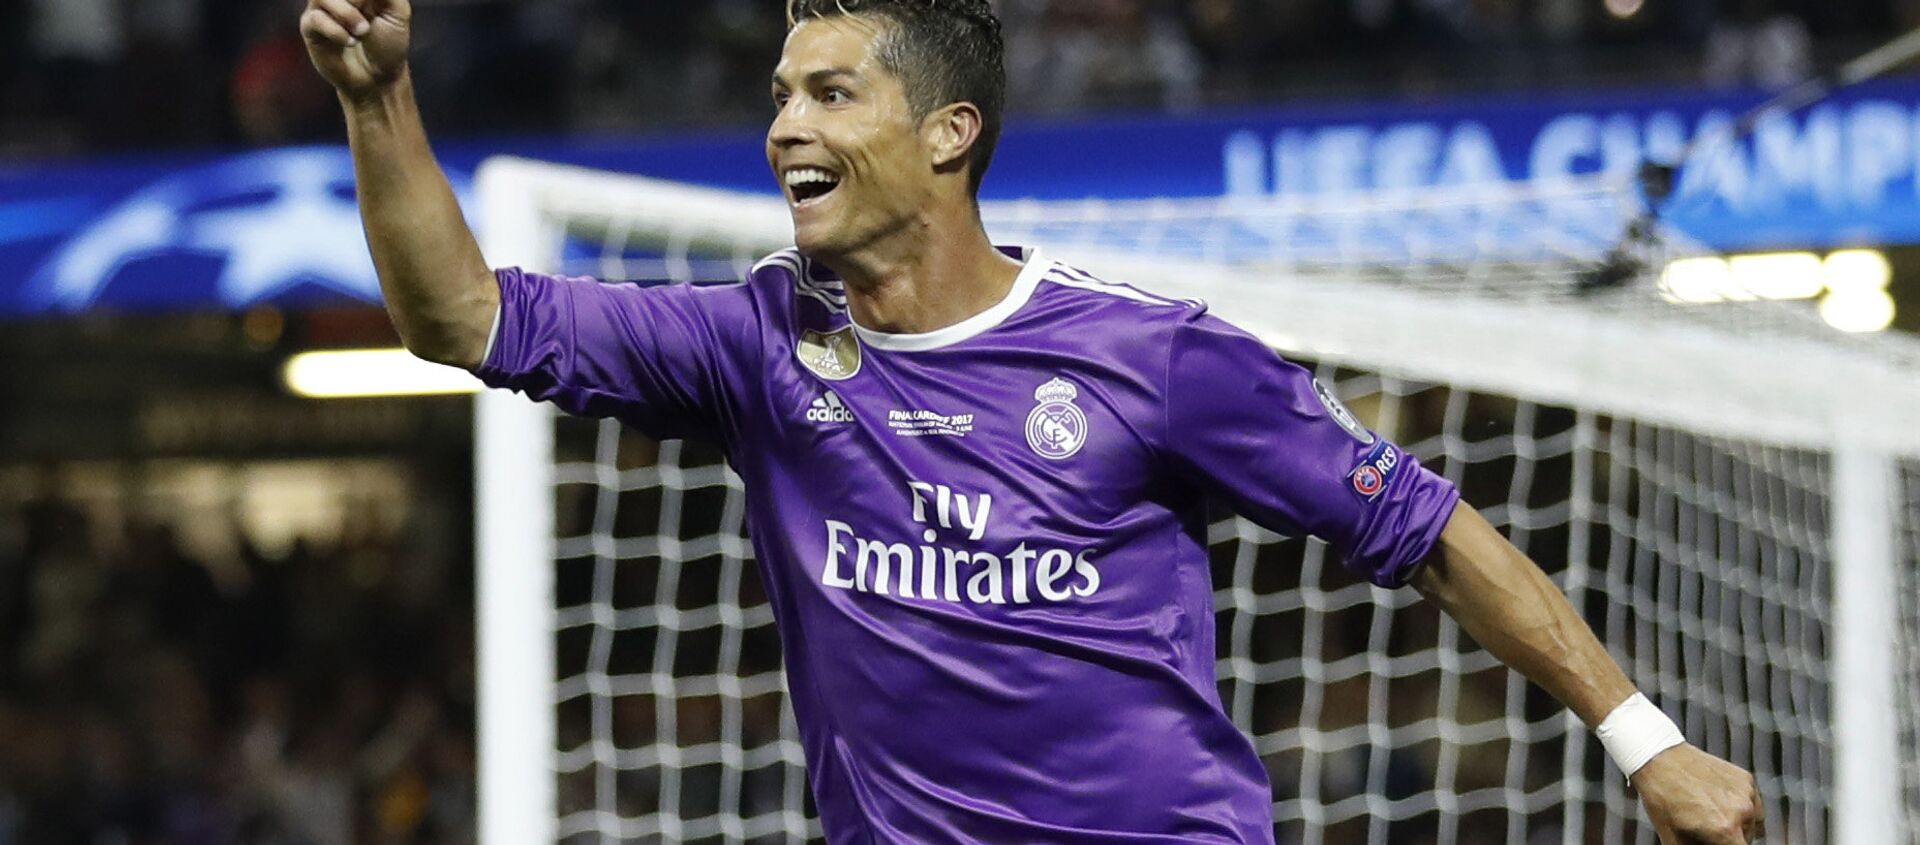 Cristiano Ronaldo del Real Madrid en la final de la Champions League - Sputnik Mundo, 1920, 06.07.2017